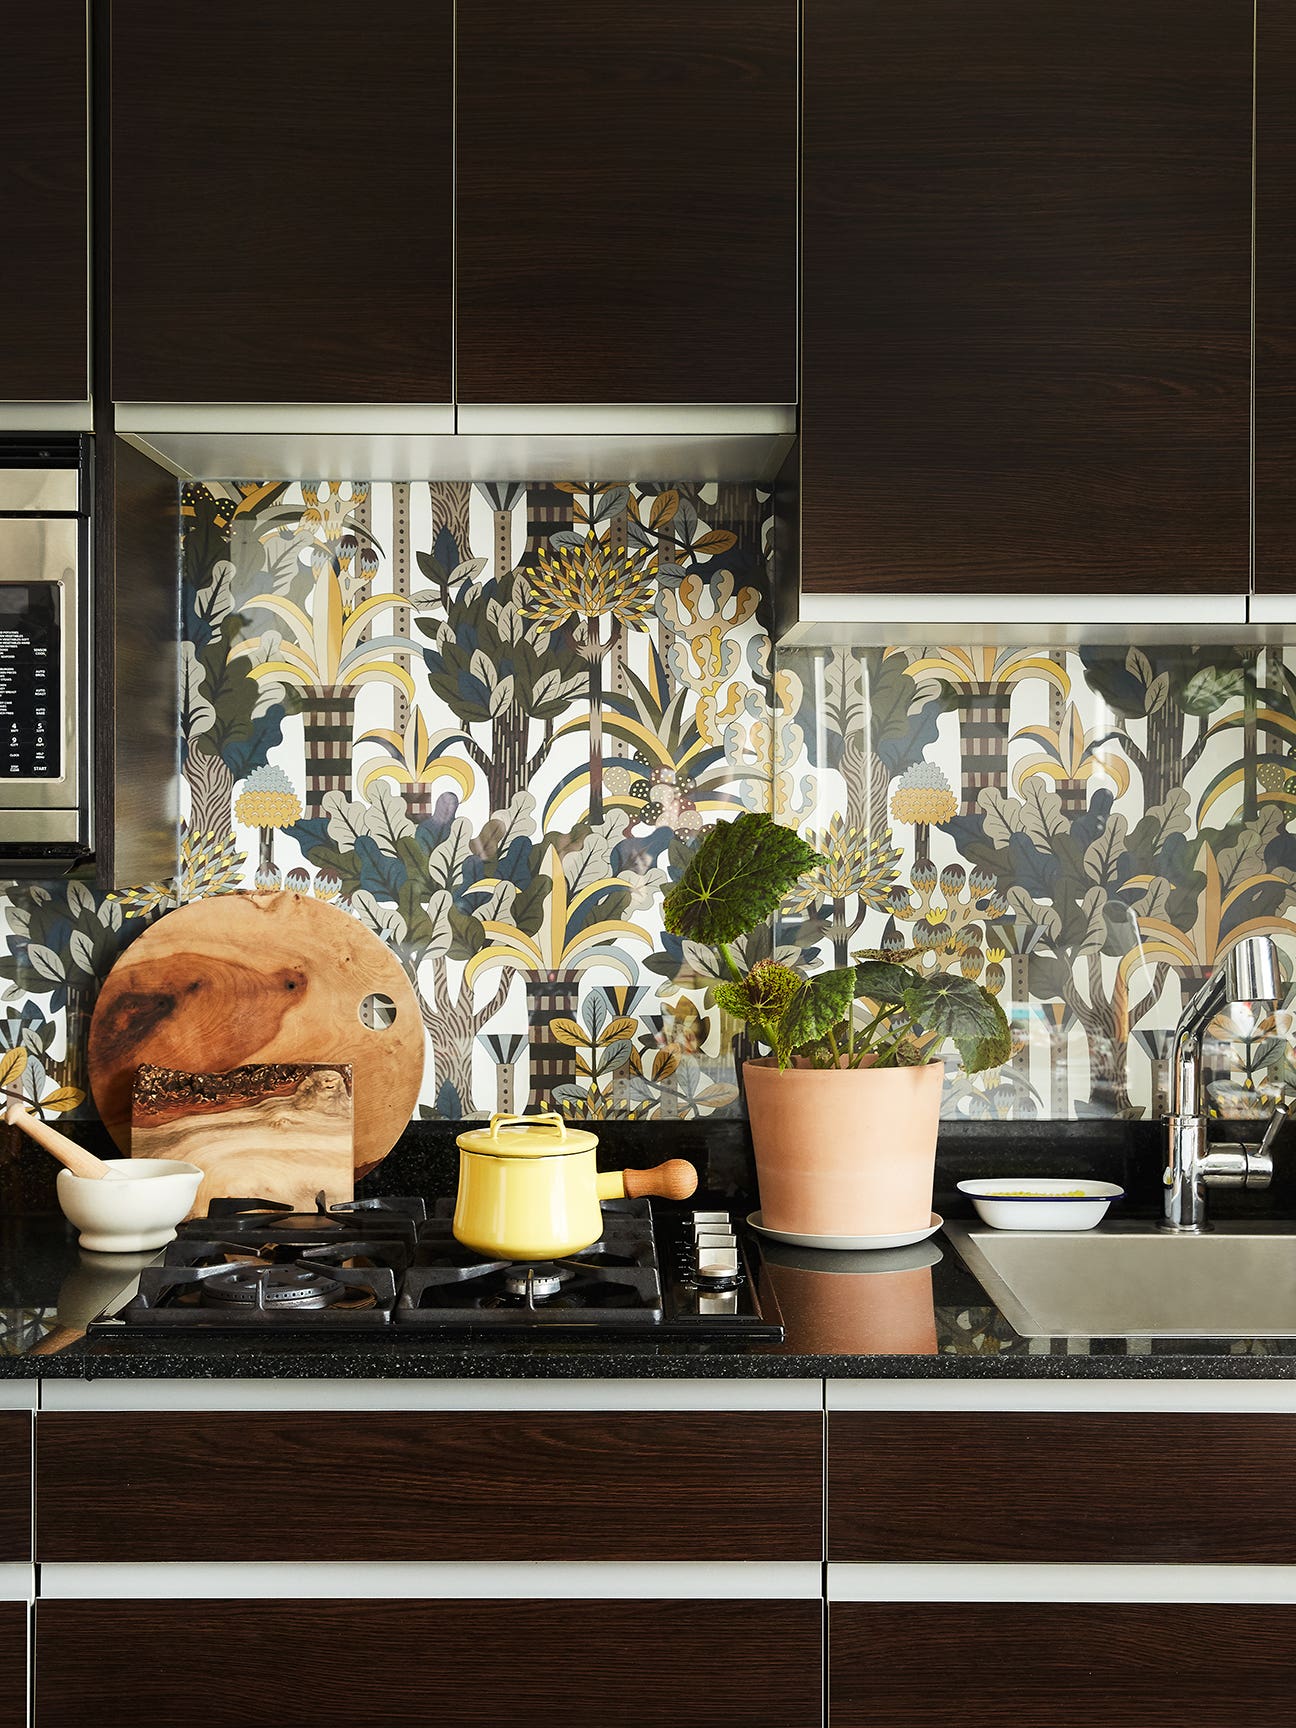 Kitchen with wallpapered backsplash